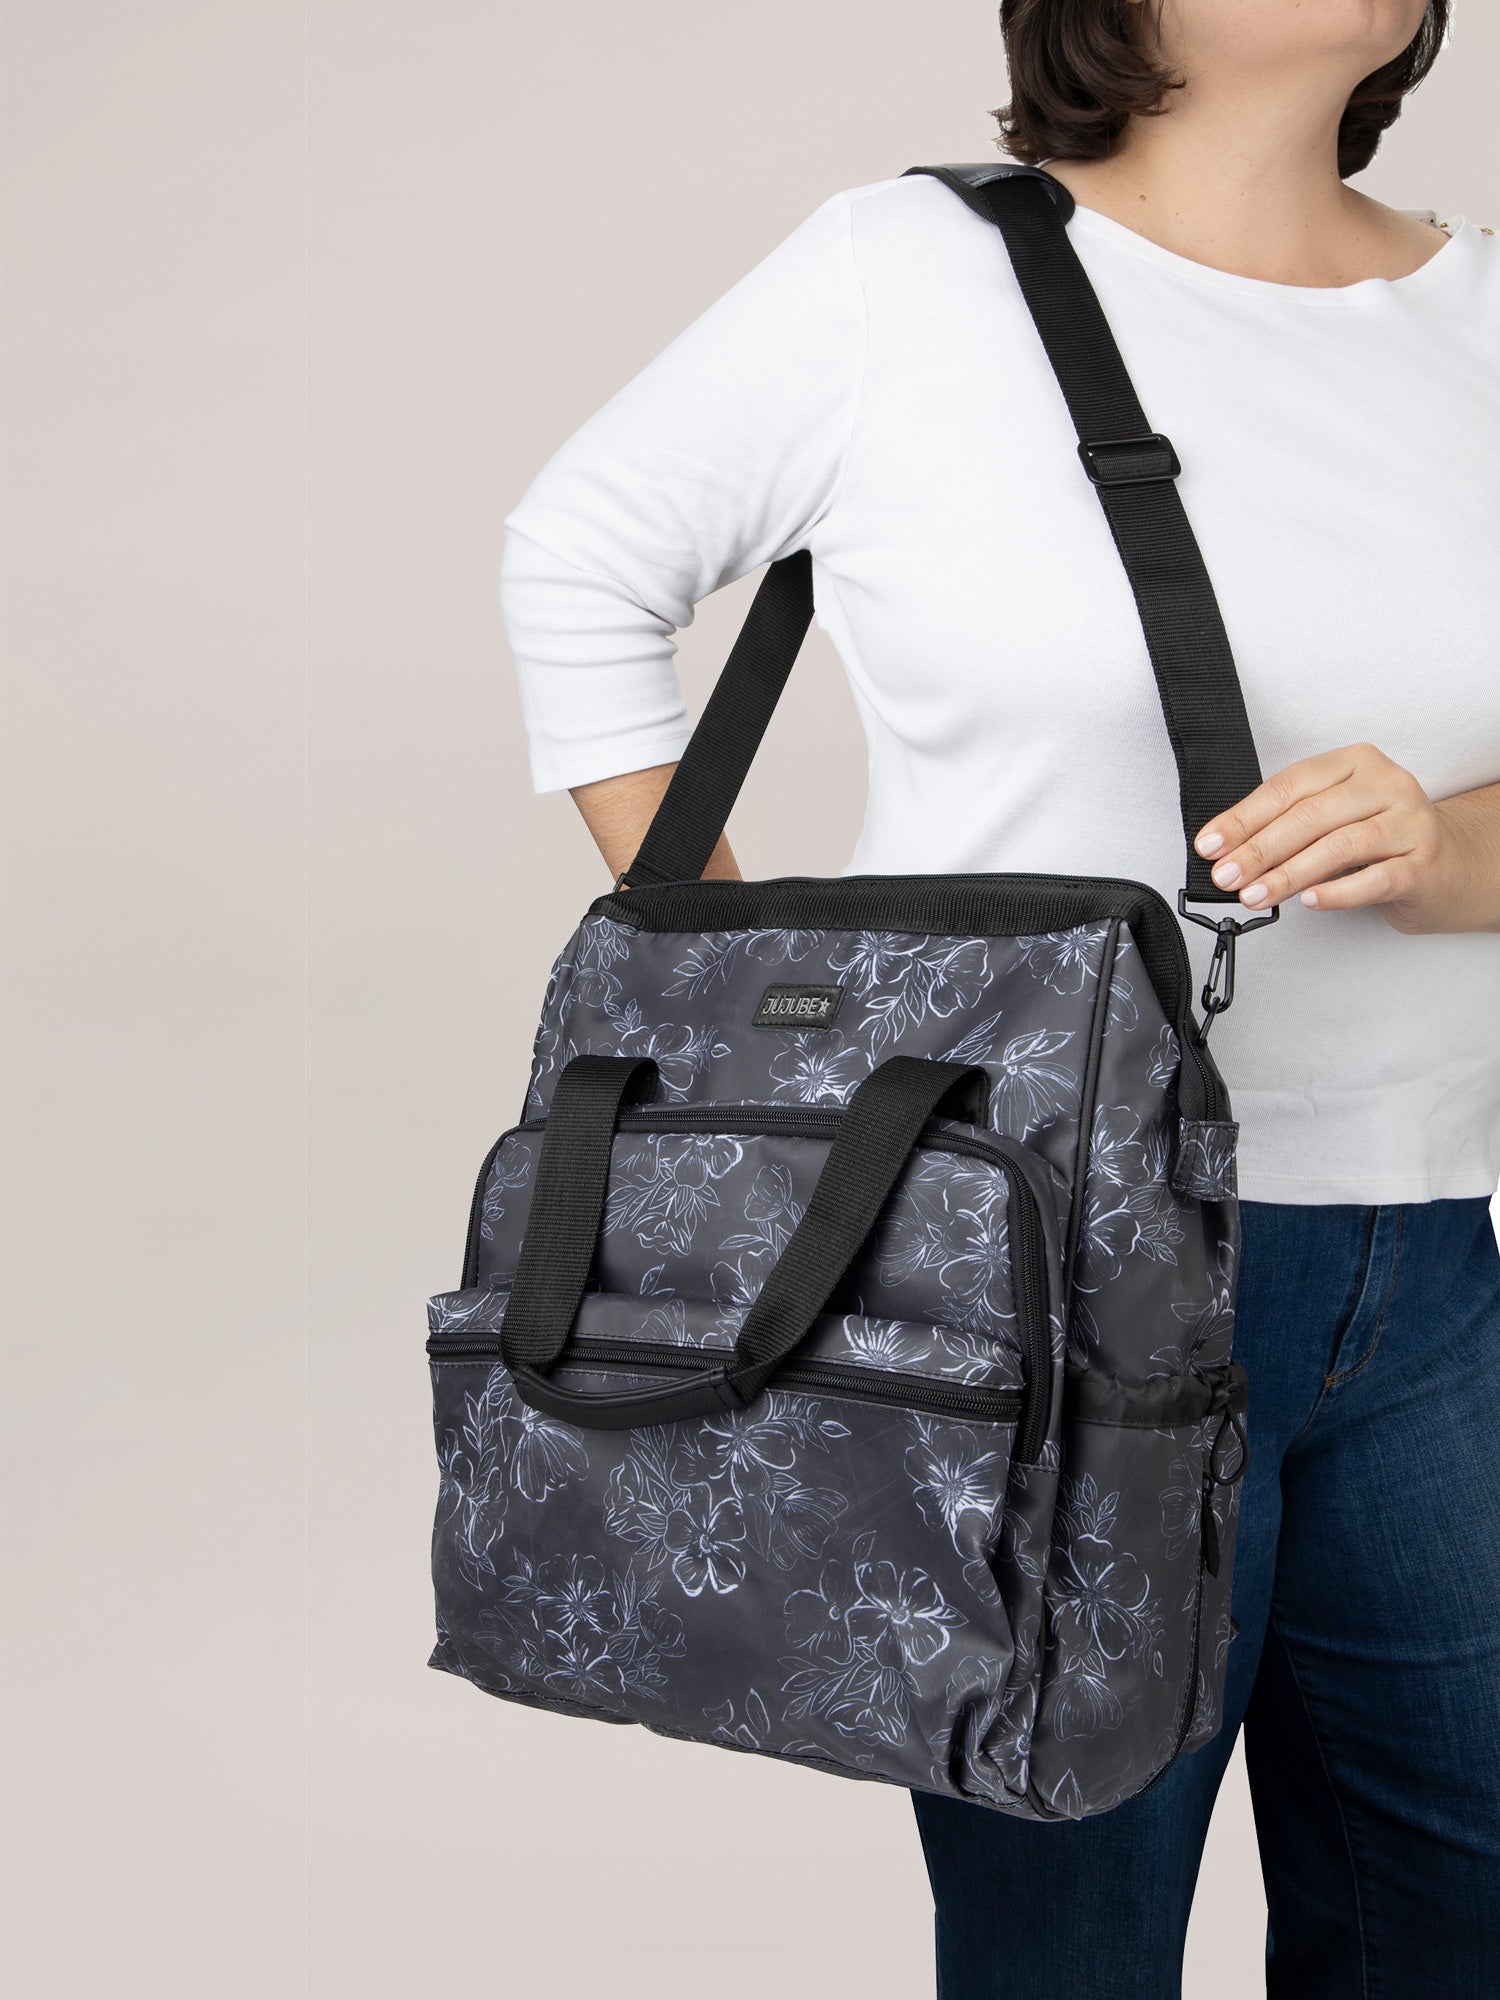 Wholesale Leather Mini Backpack School Bags Women Jamaica Doctor